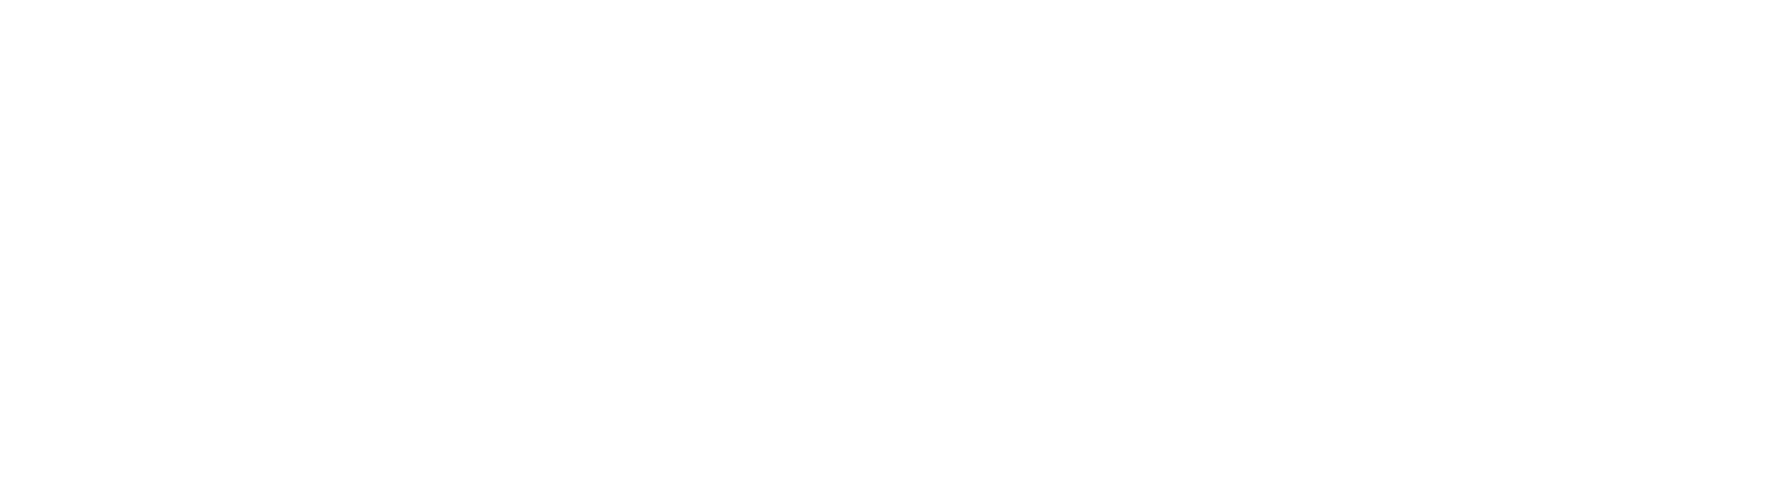 Christmas at Castle Hart logo